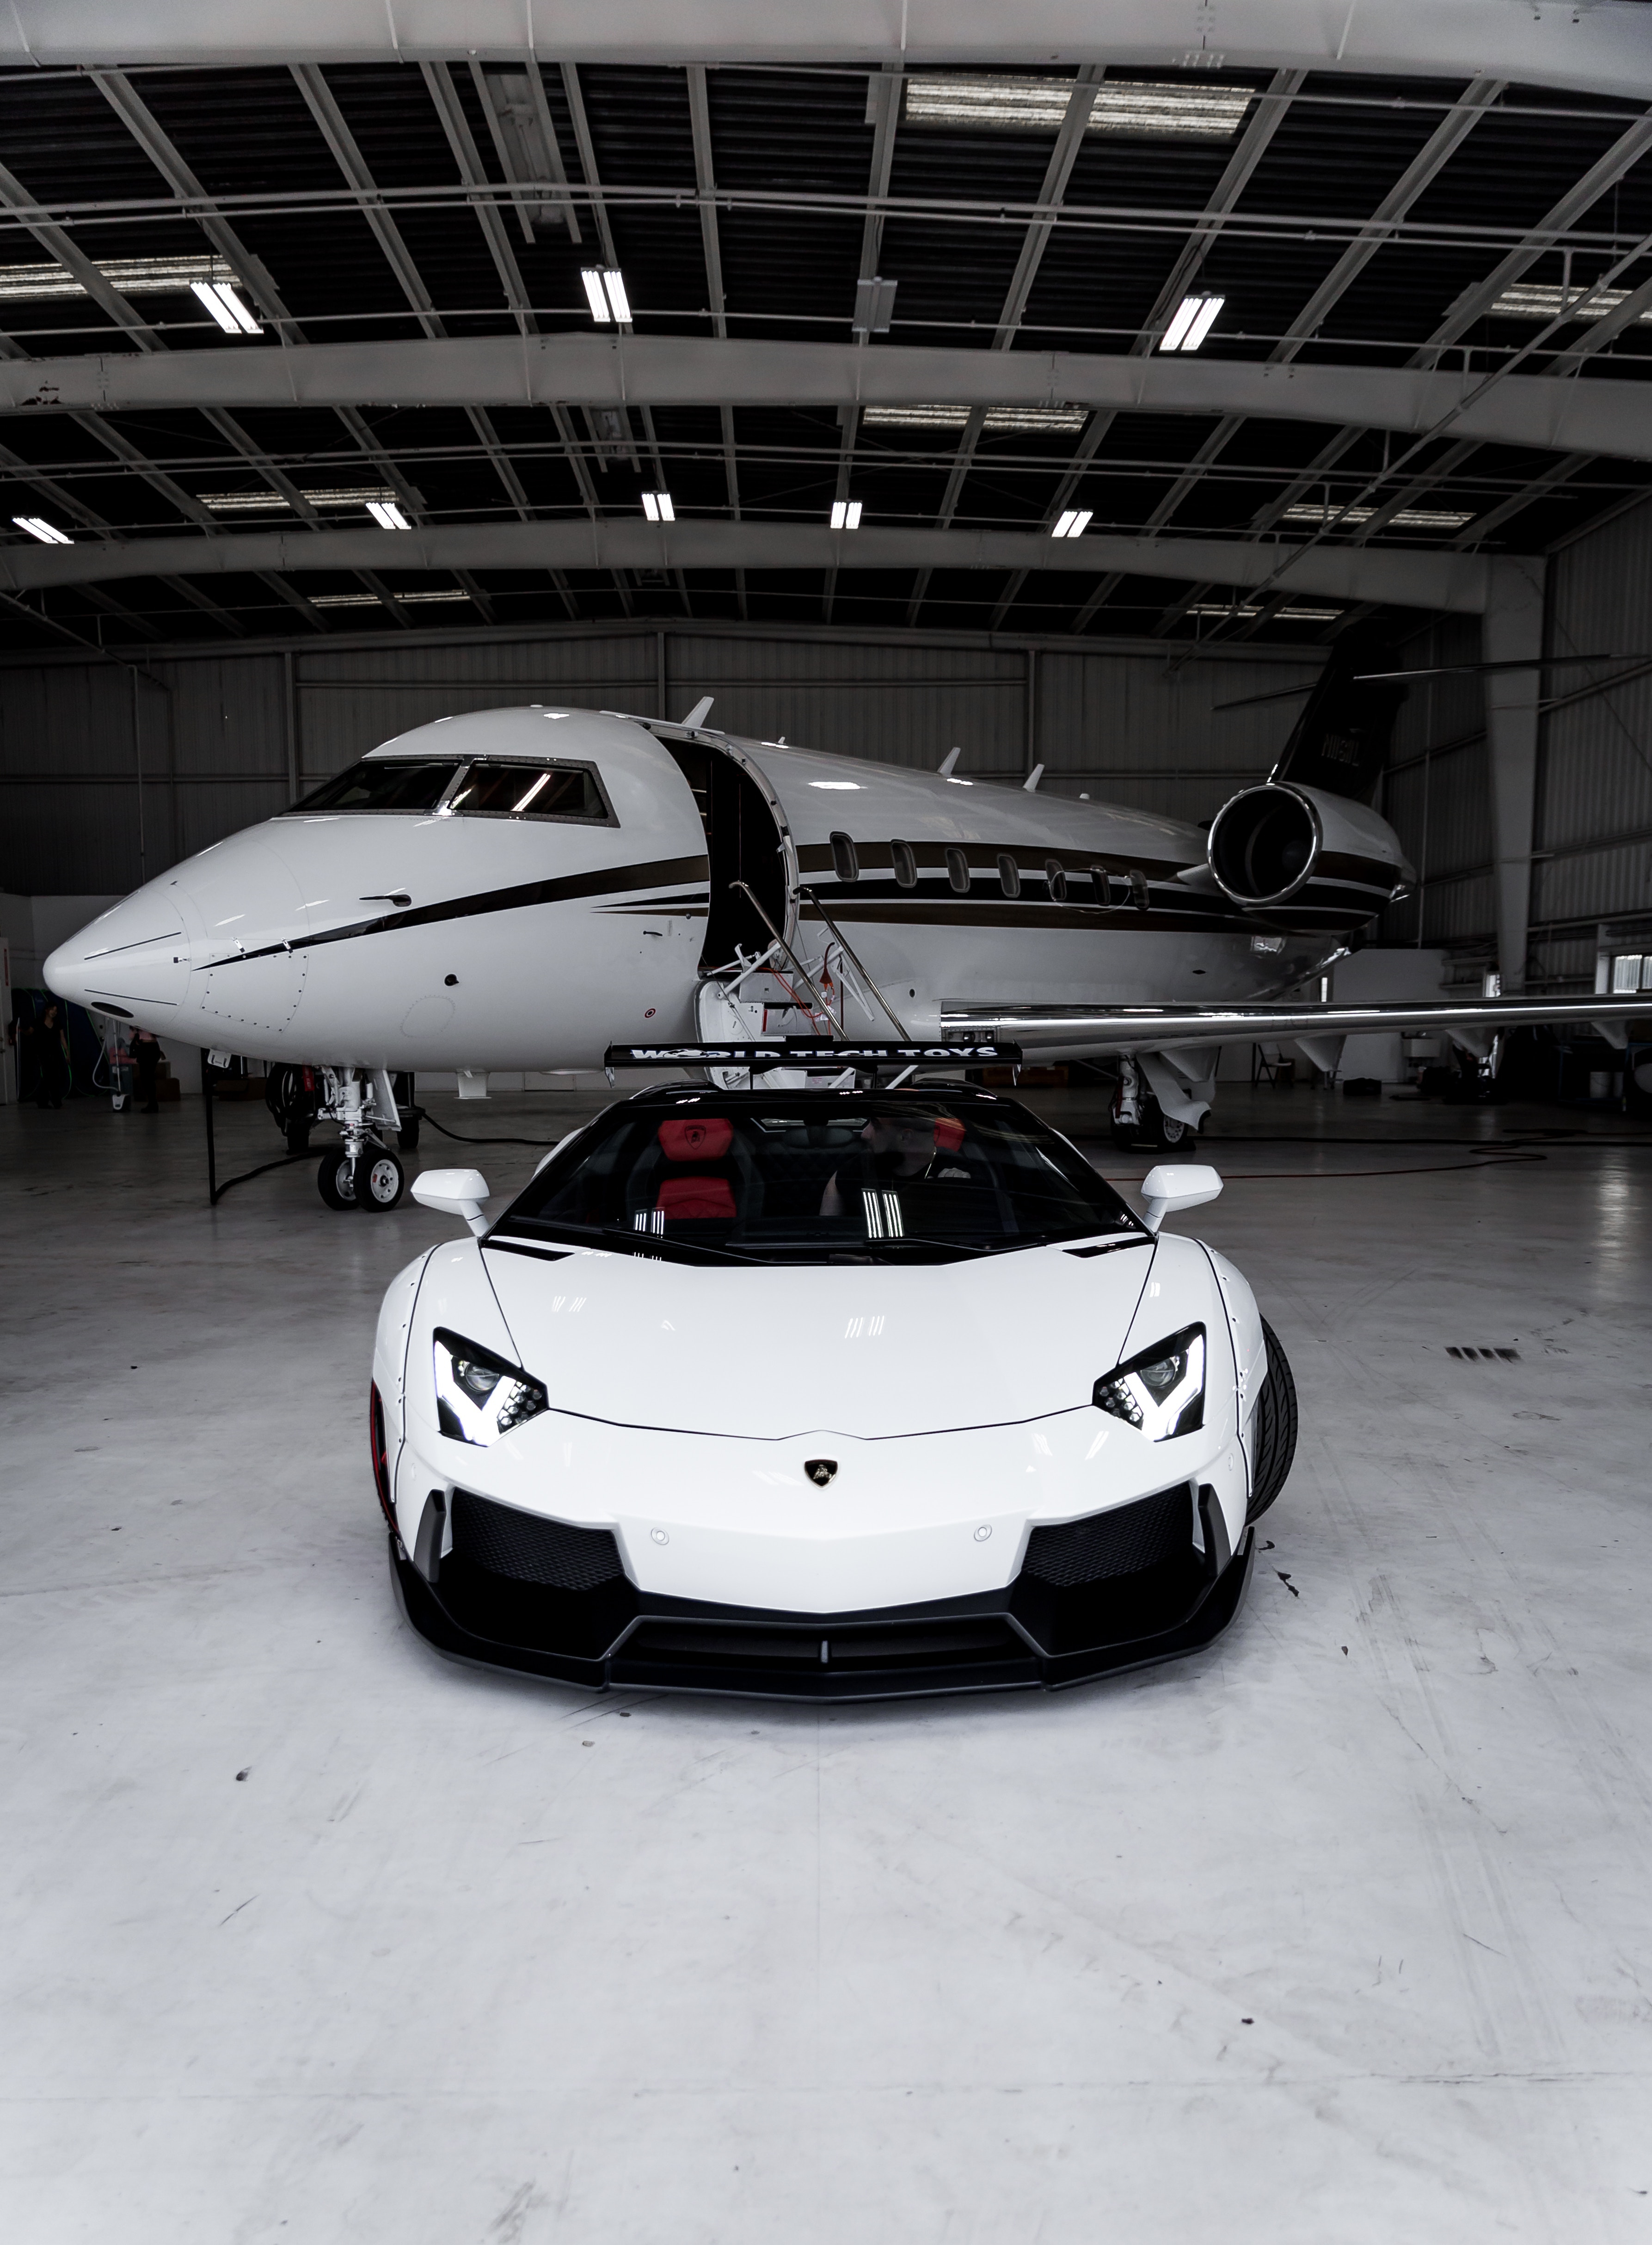 Lamborghini Private Jet Hangar Car 3573x4856